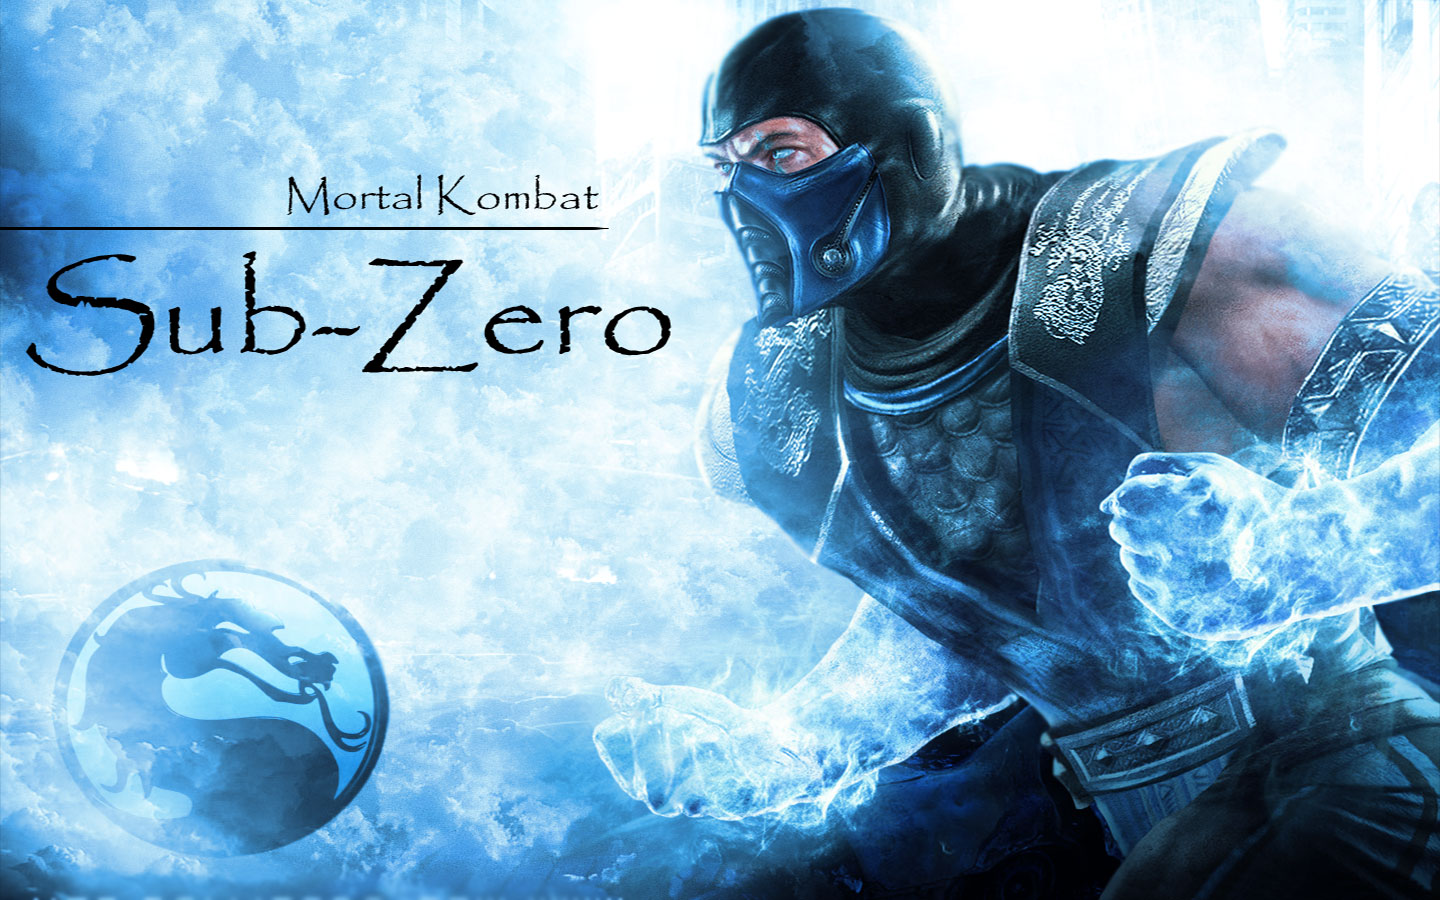 HD Wallpaper Sub Zero Mortal Kombat Widescreen Wide By